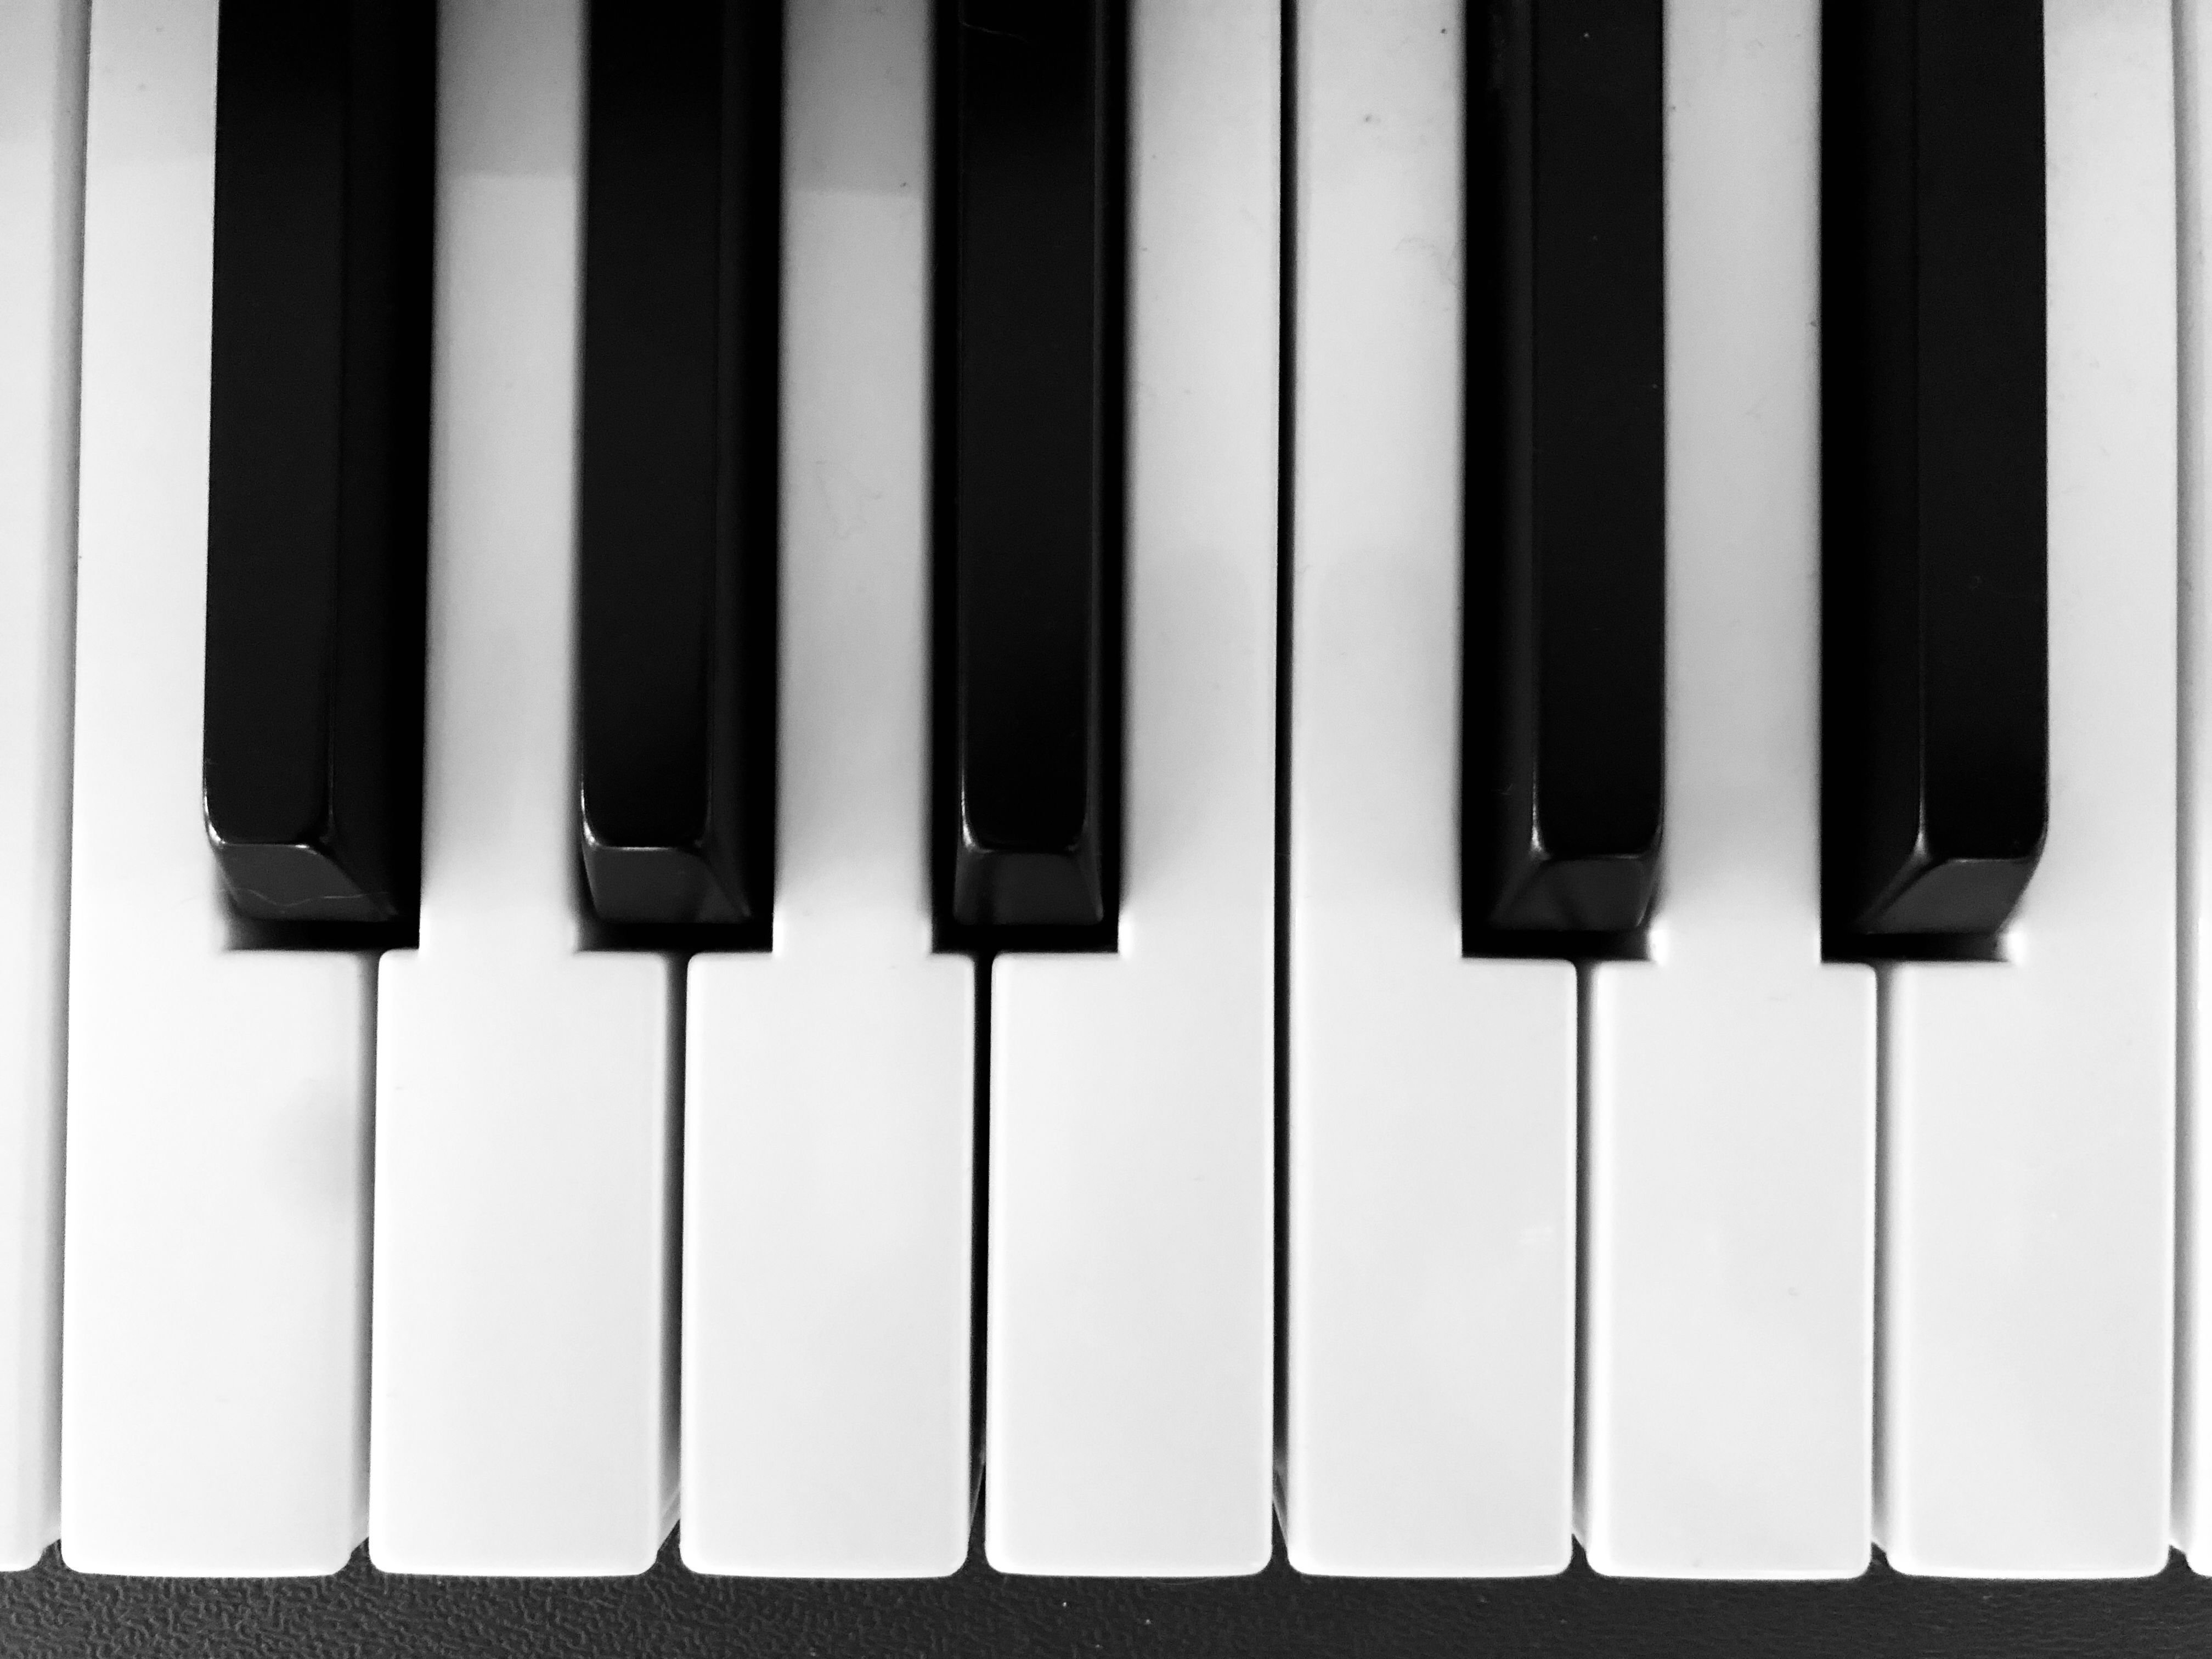 Фортепиано белые клавиши. Пианинная клавиатура. Клавиши фортепиано. Клавиатура пианино. Фортепианная клавиатура.